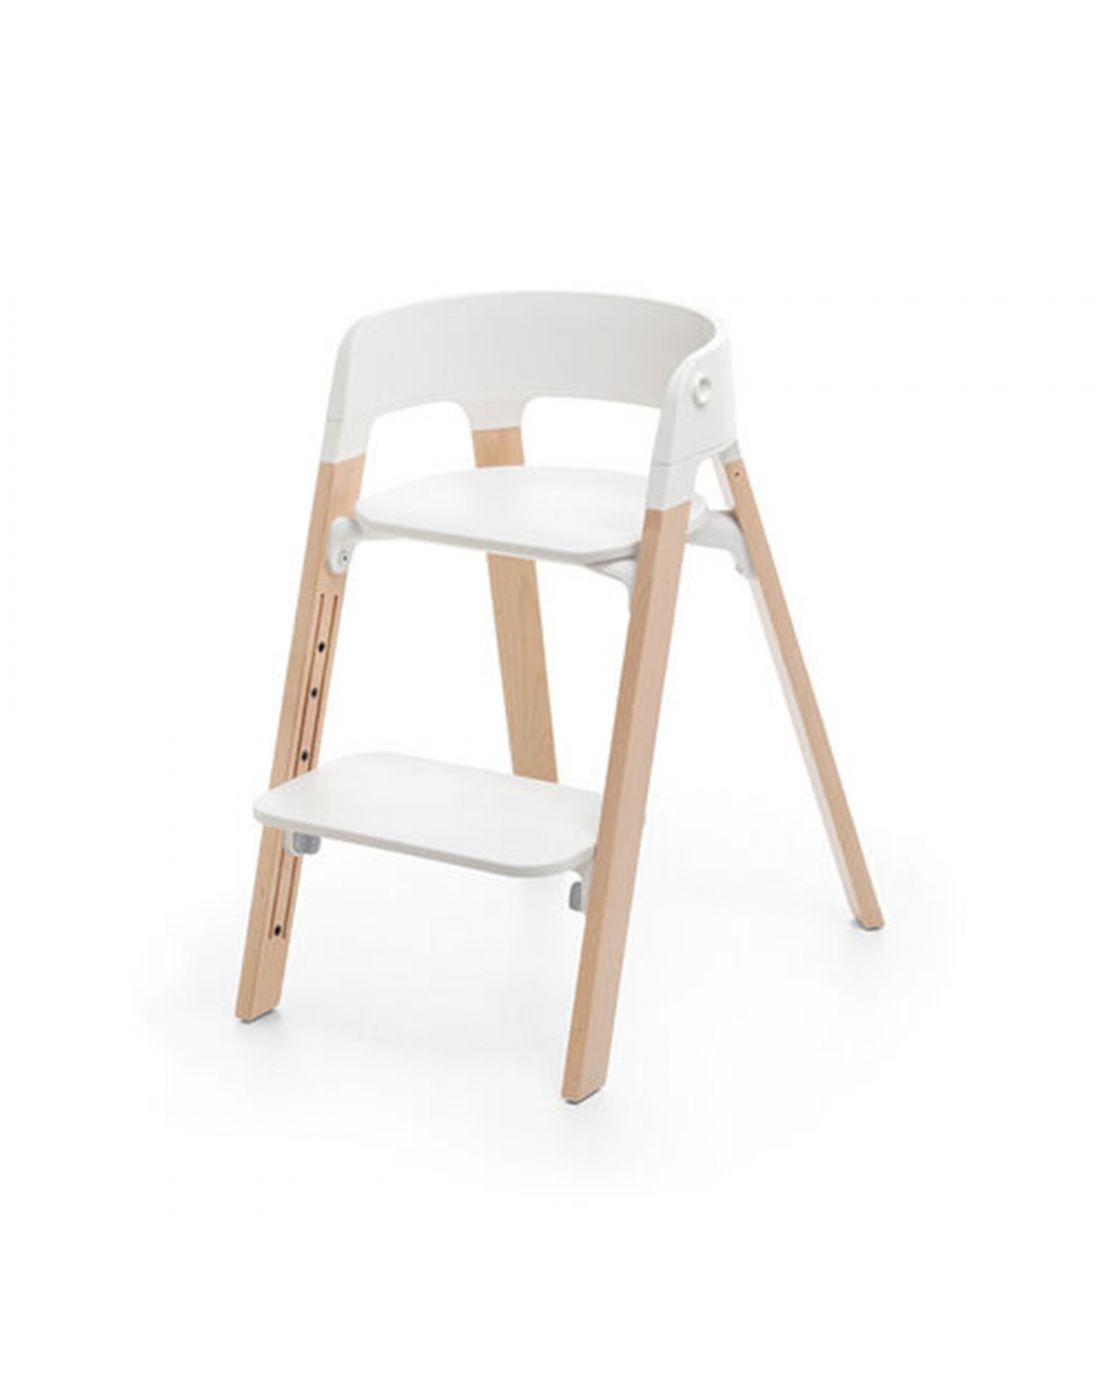 Stokke Kids Steps Chair White/Natural